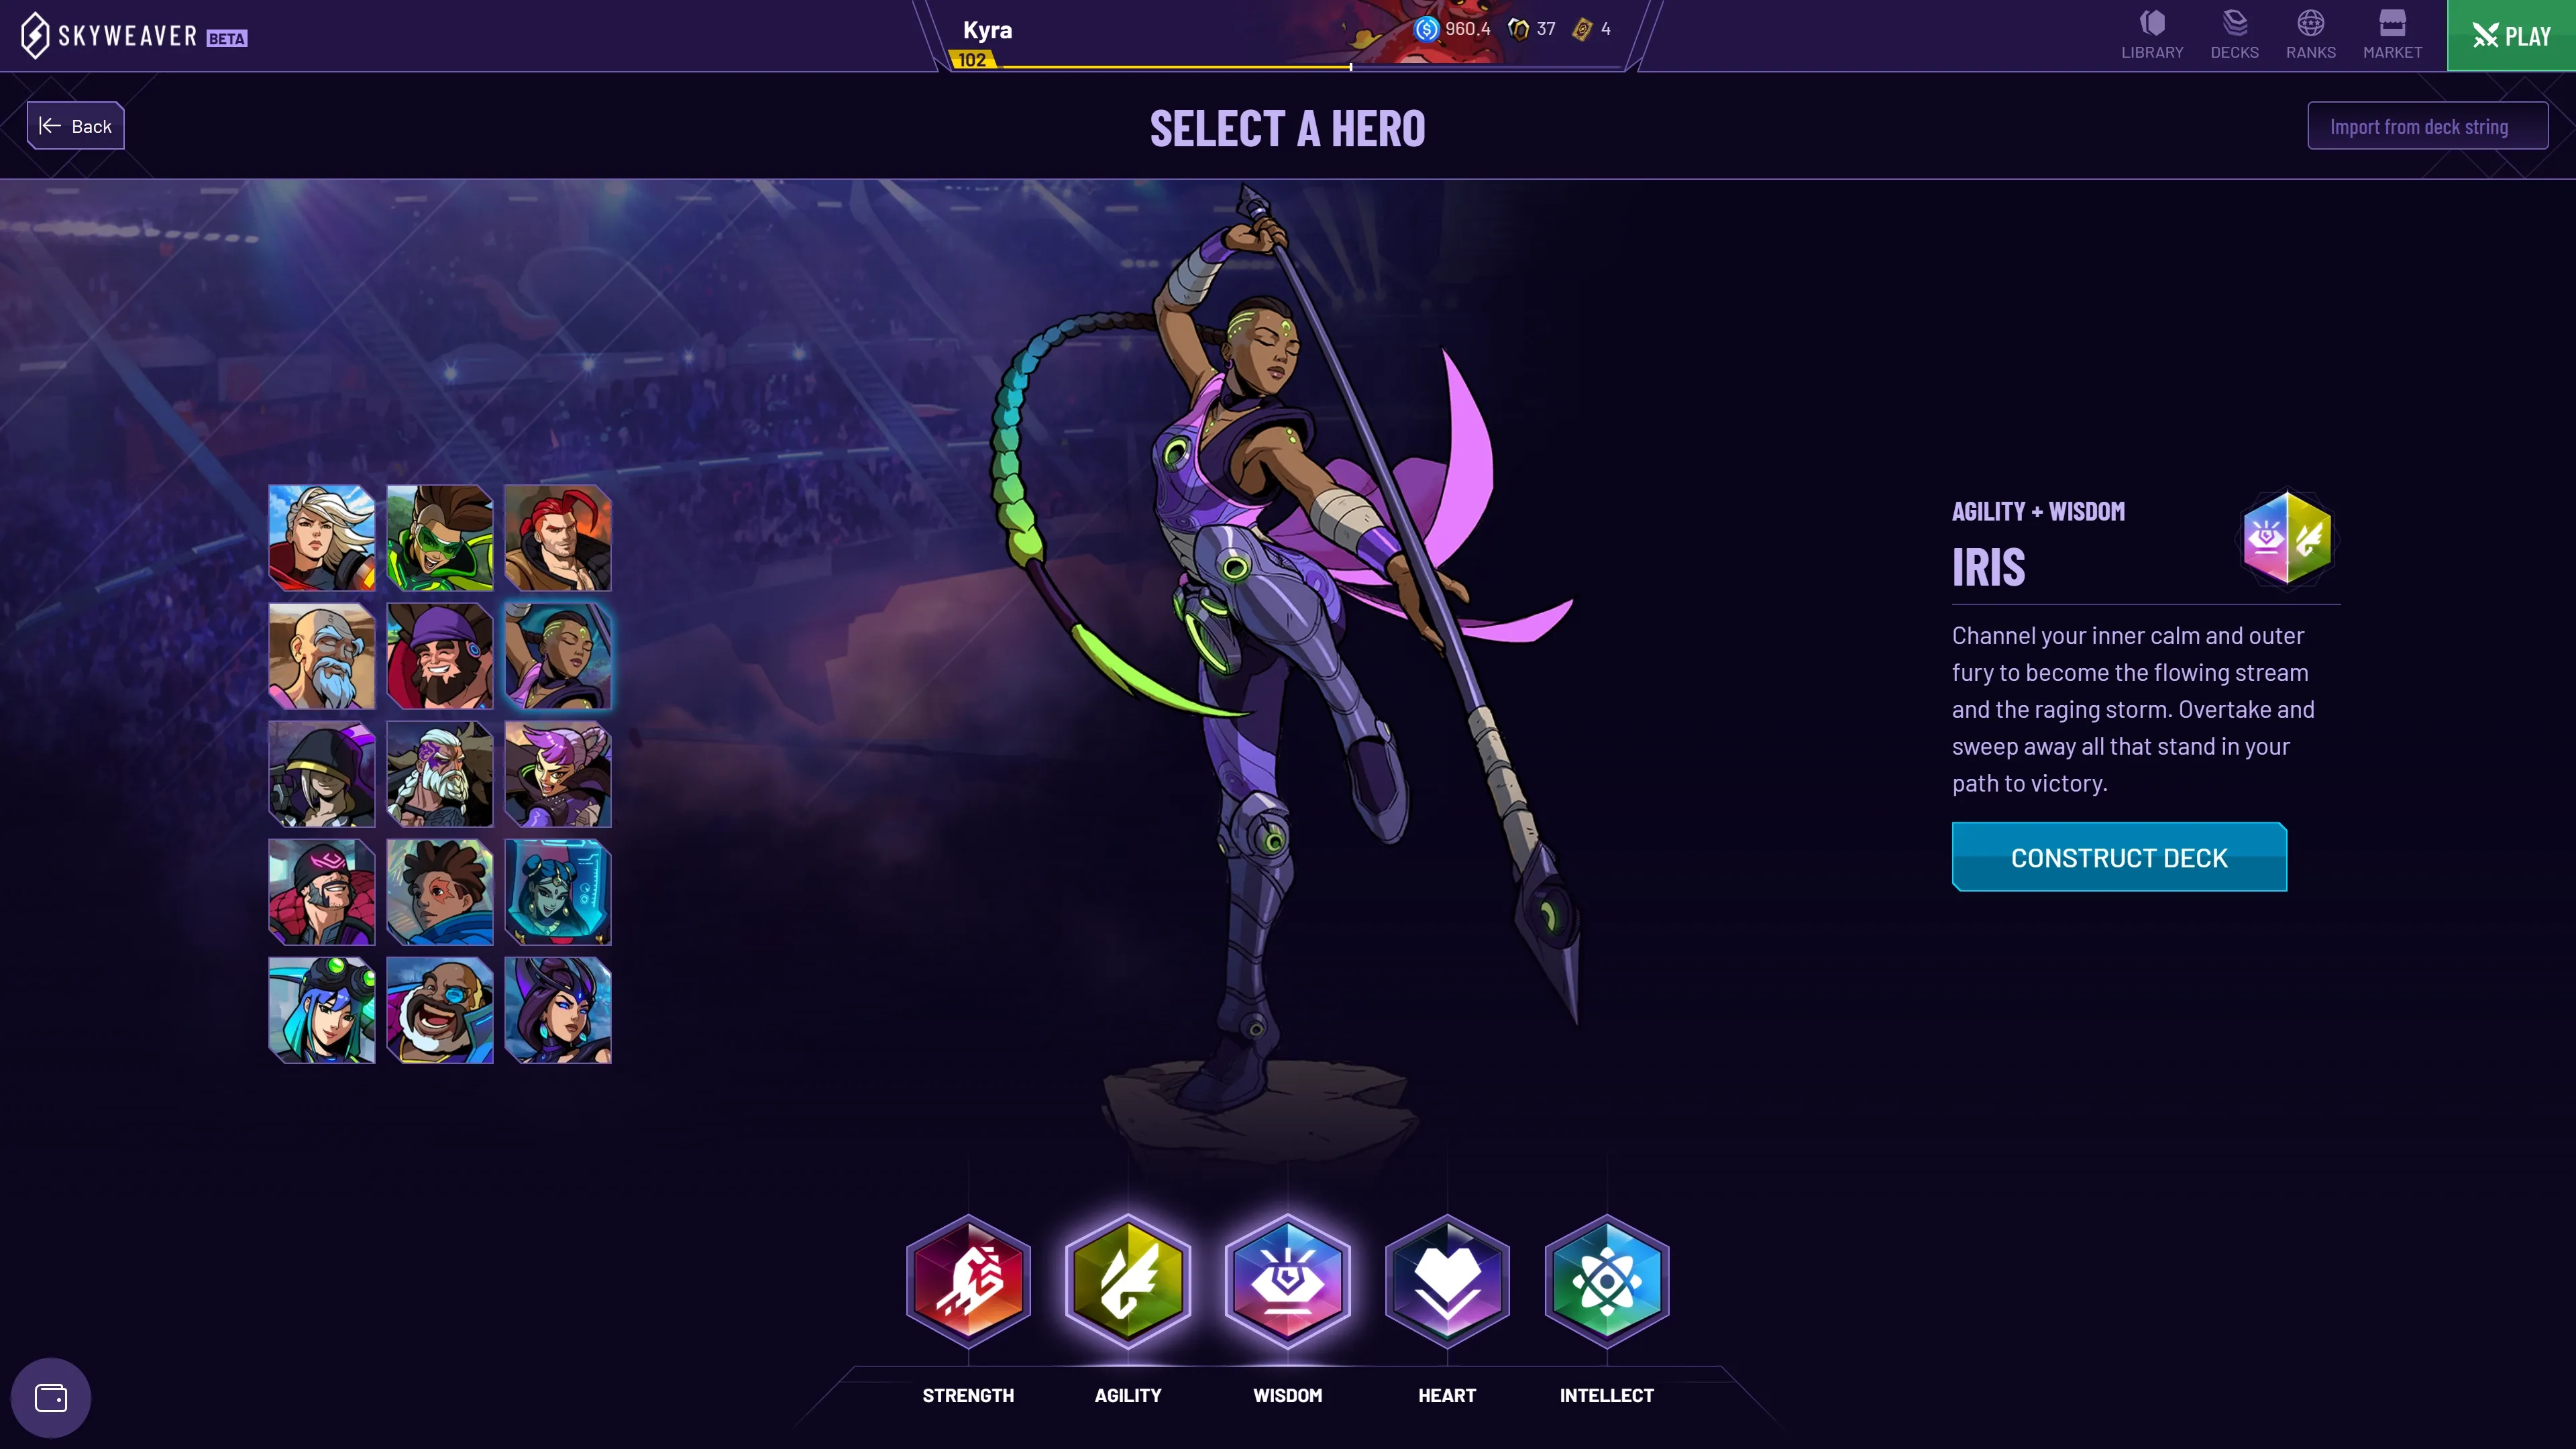 Skyweaver gameplay: Iris Hero Description